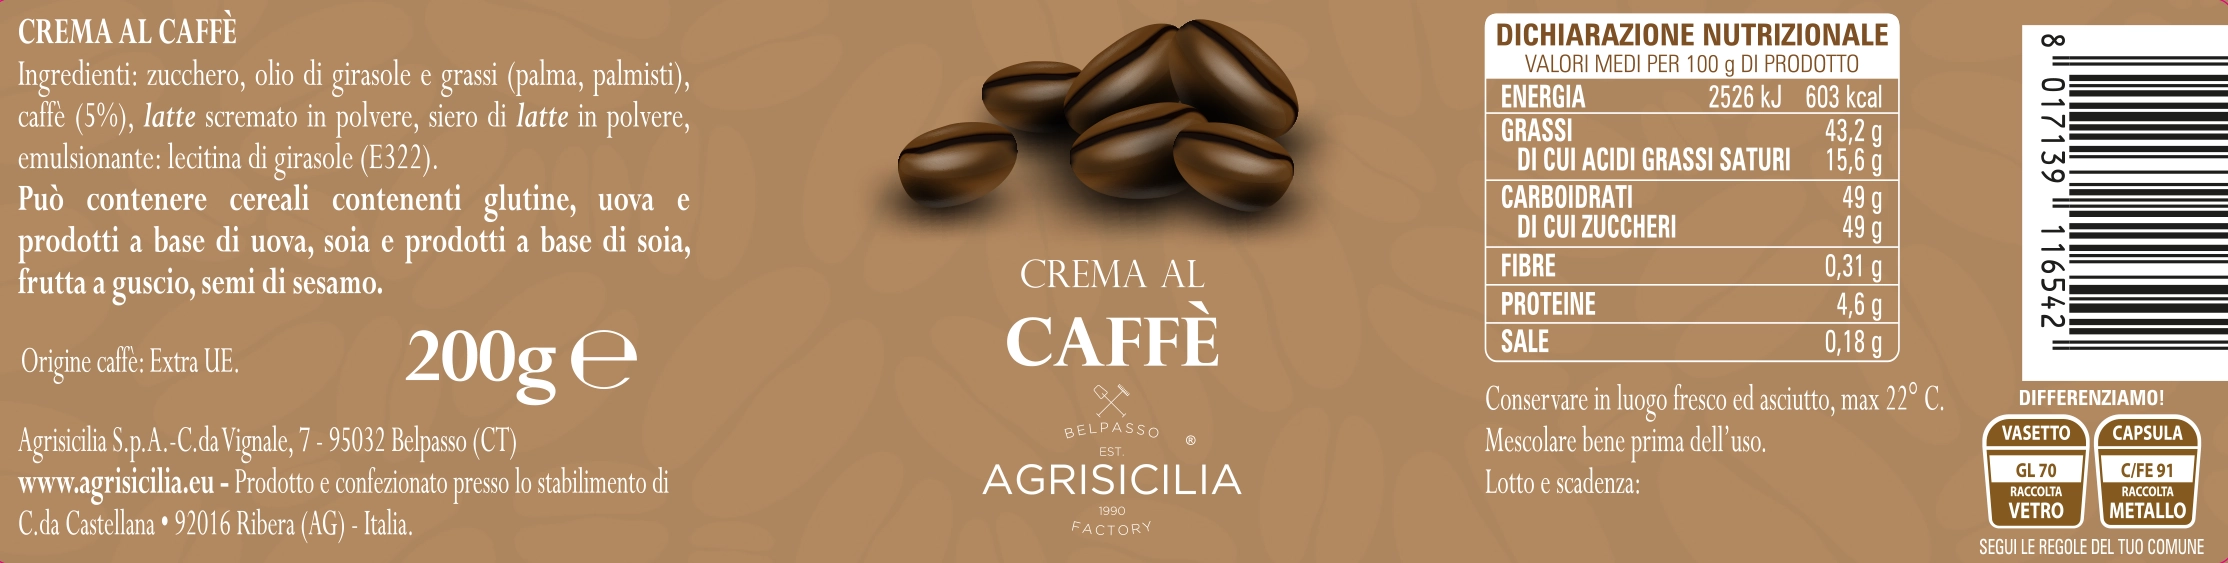 Crema Al Caffe It 1 1